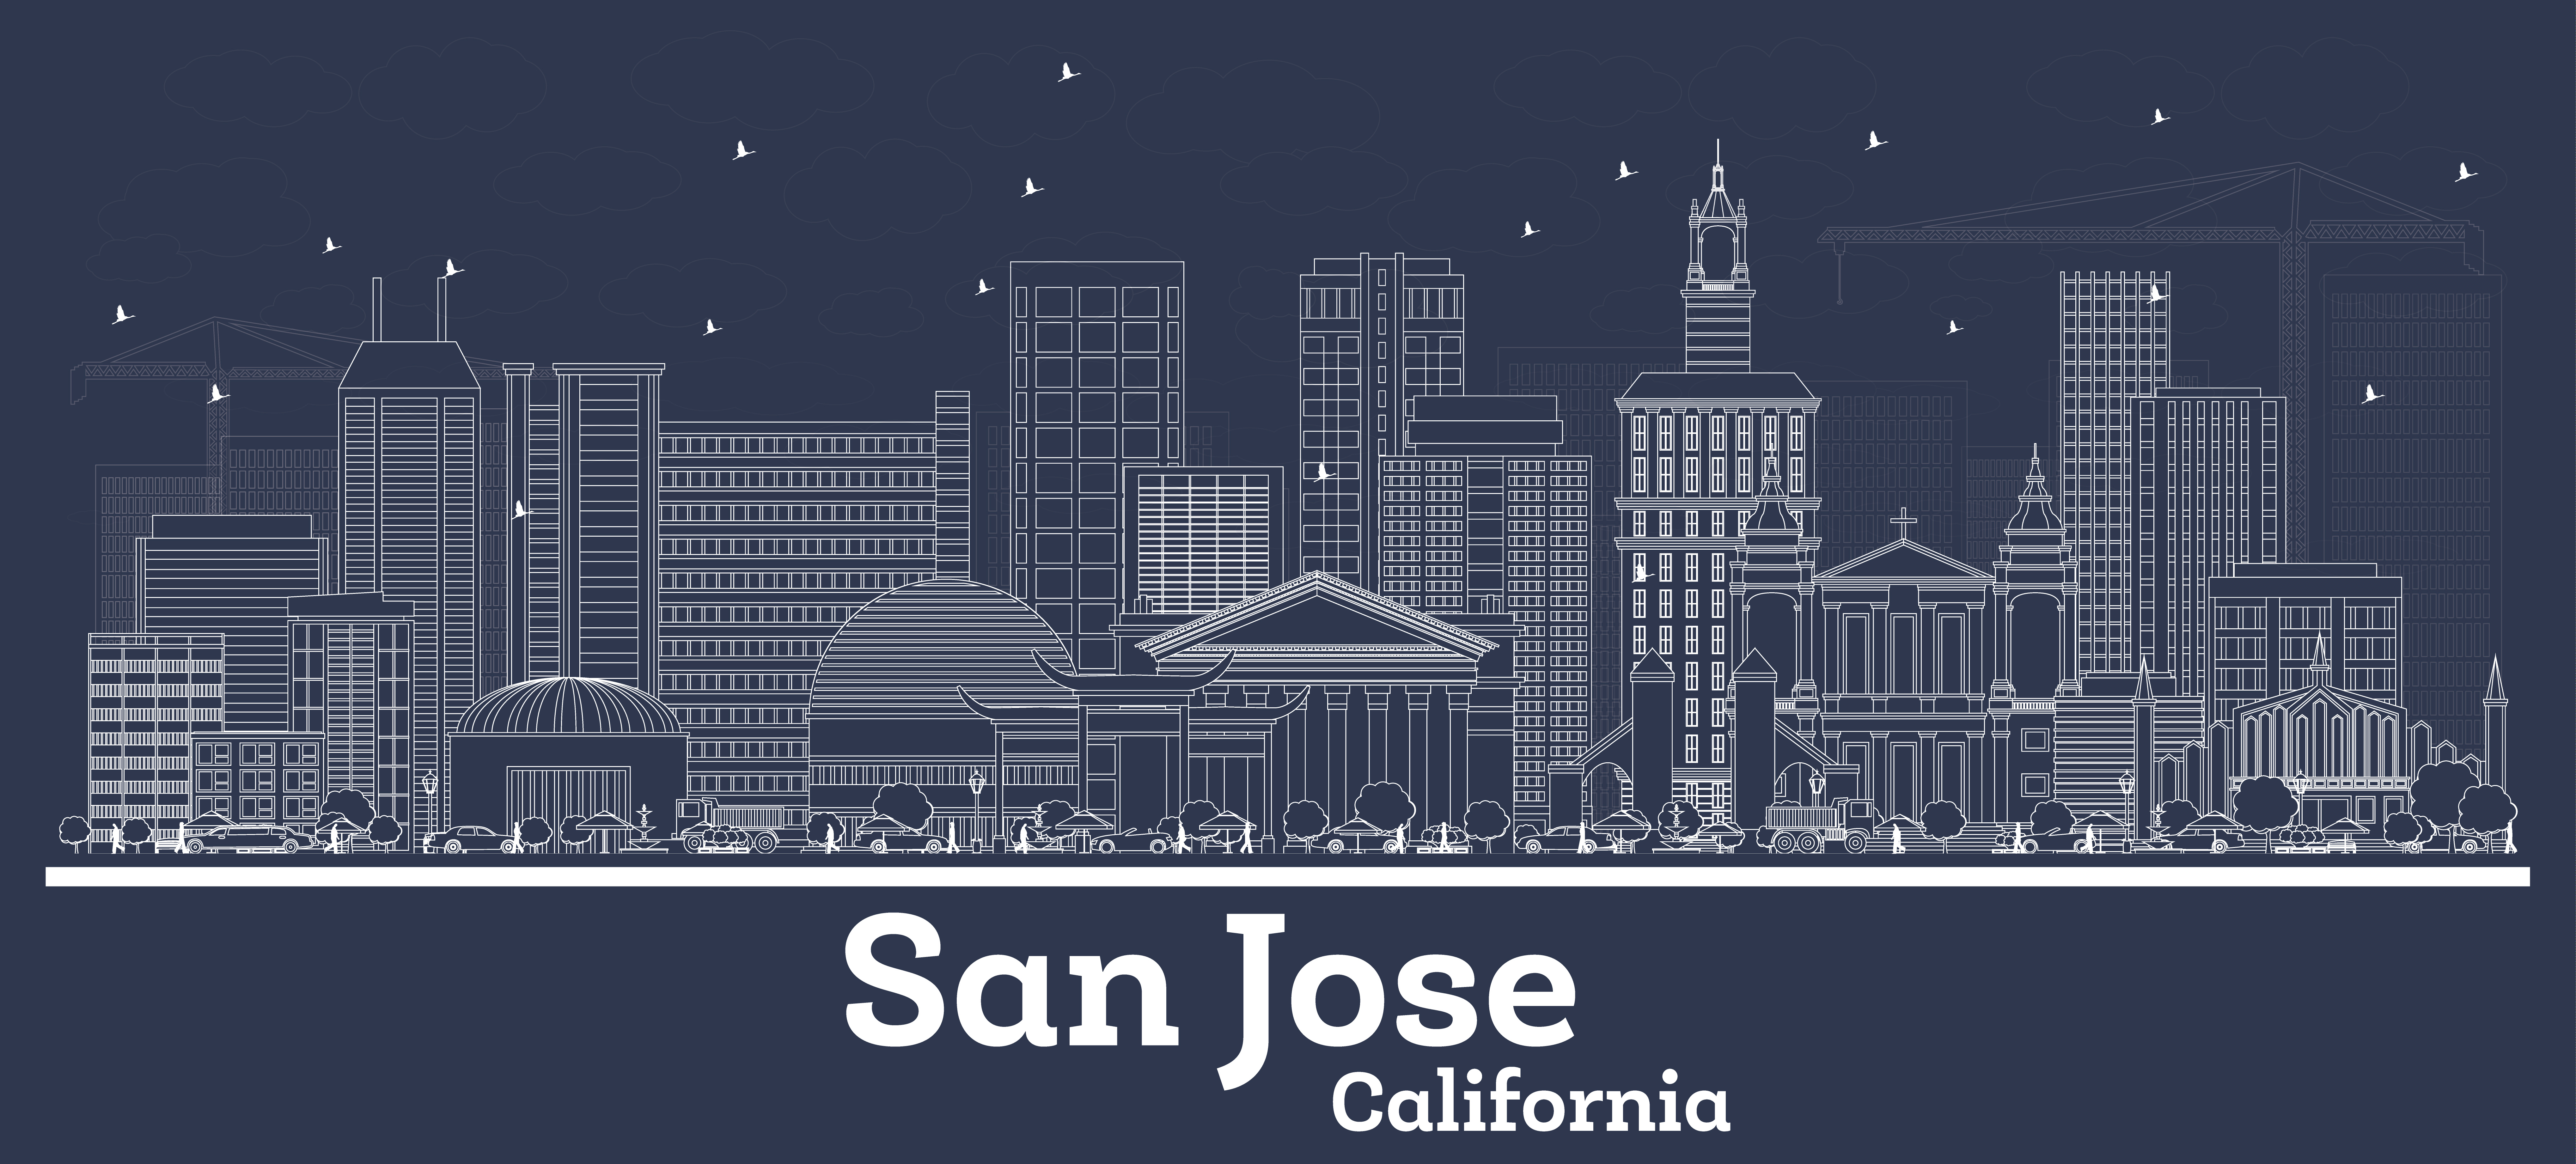 San Jose California, vector drawing of stylized skyline